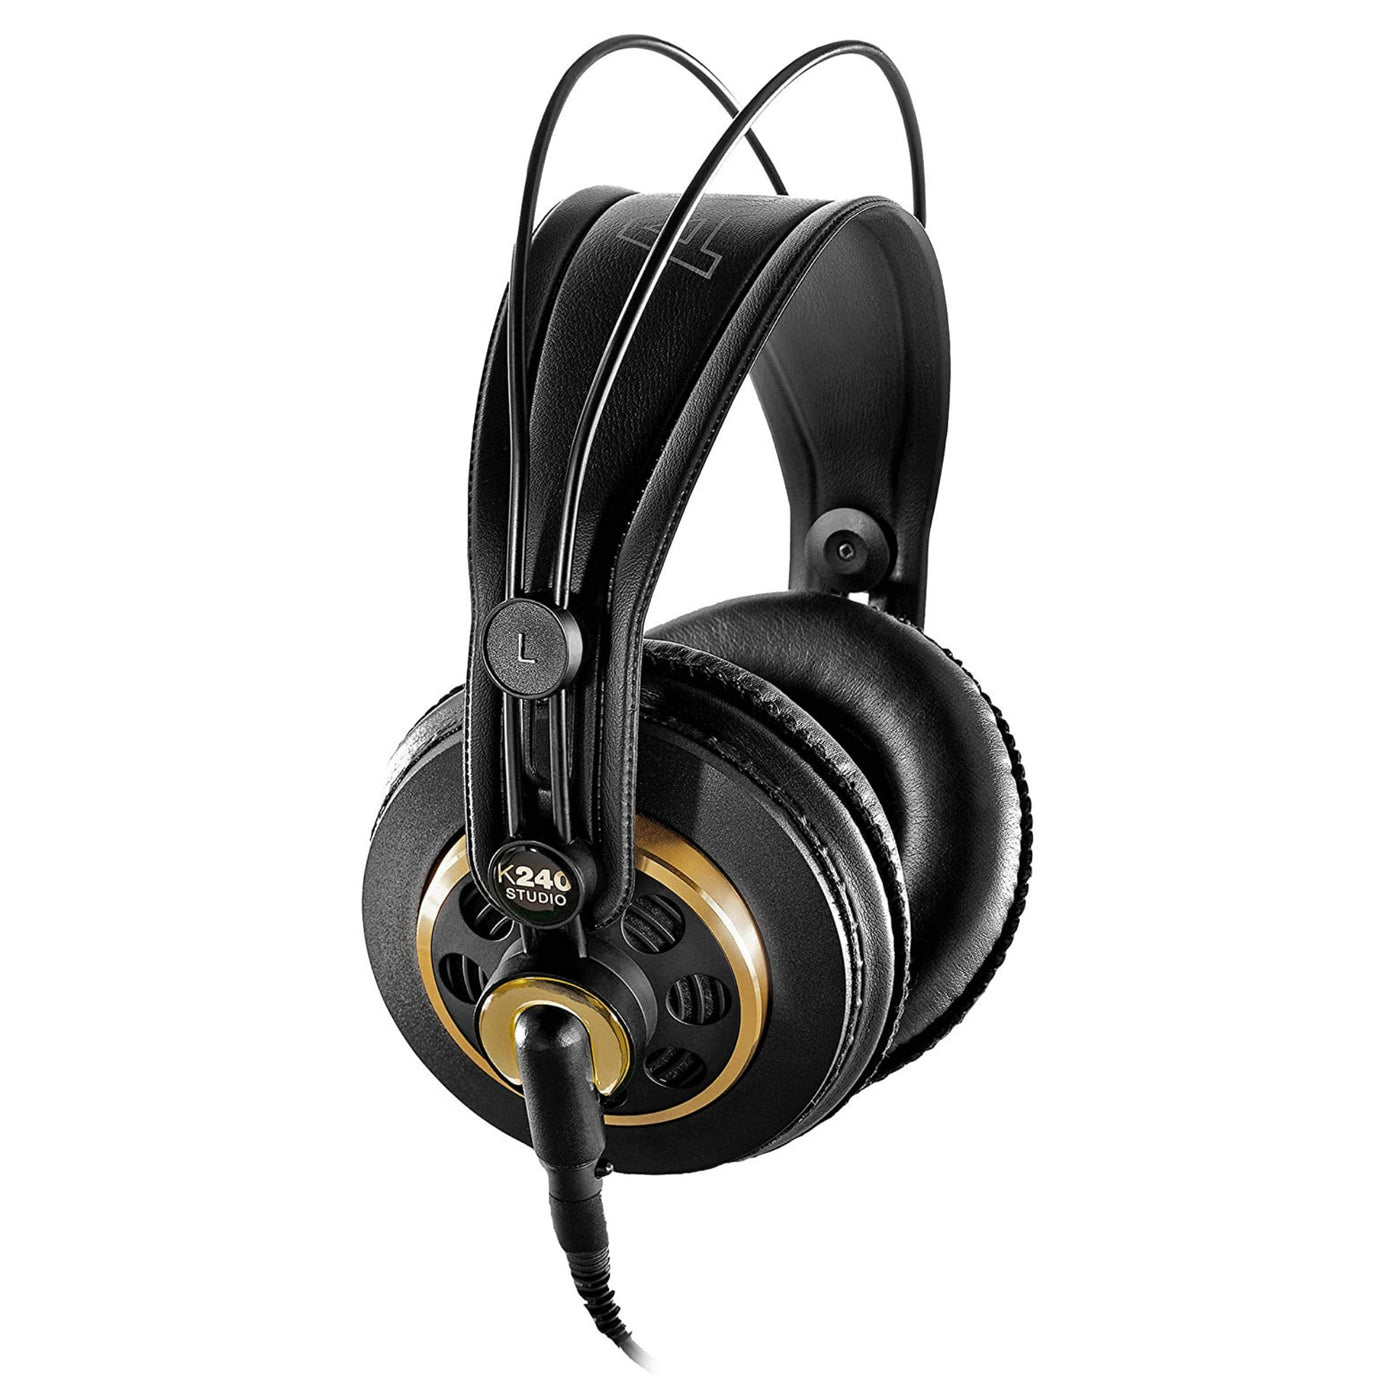 K240 Studio Professional Studio Headphones